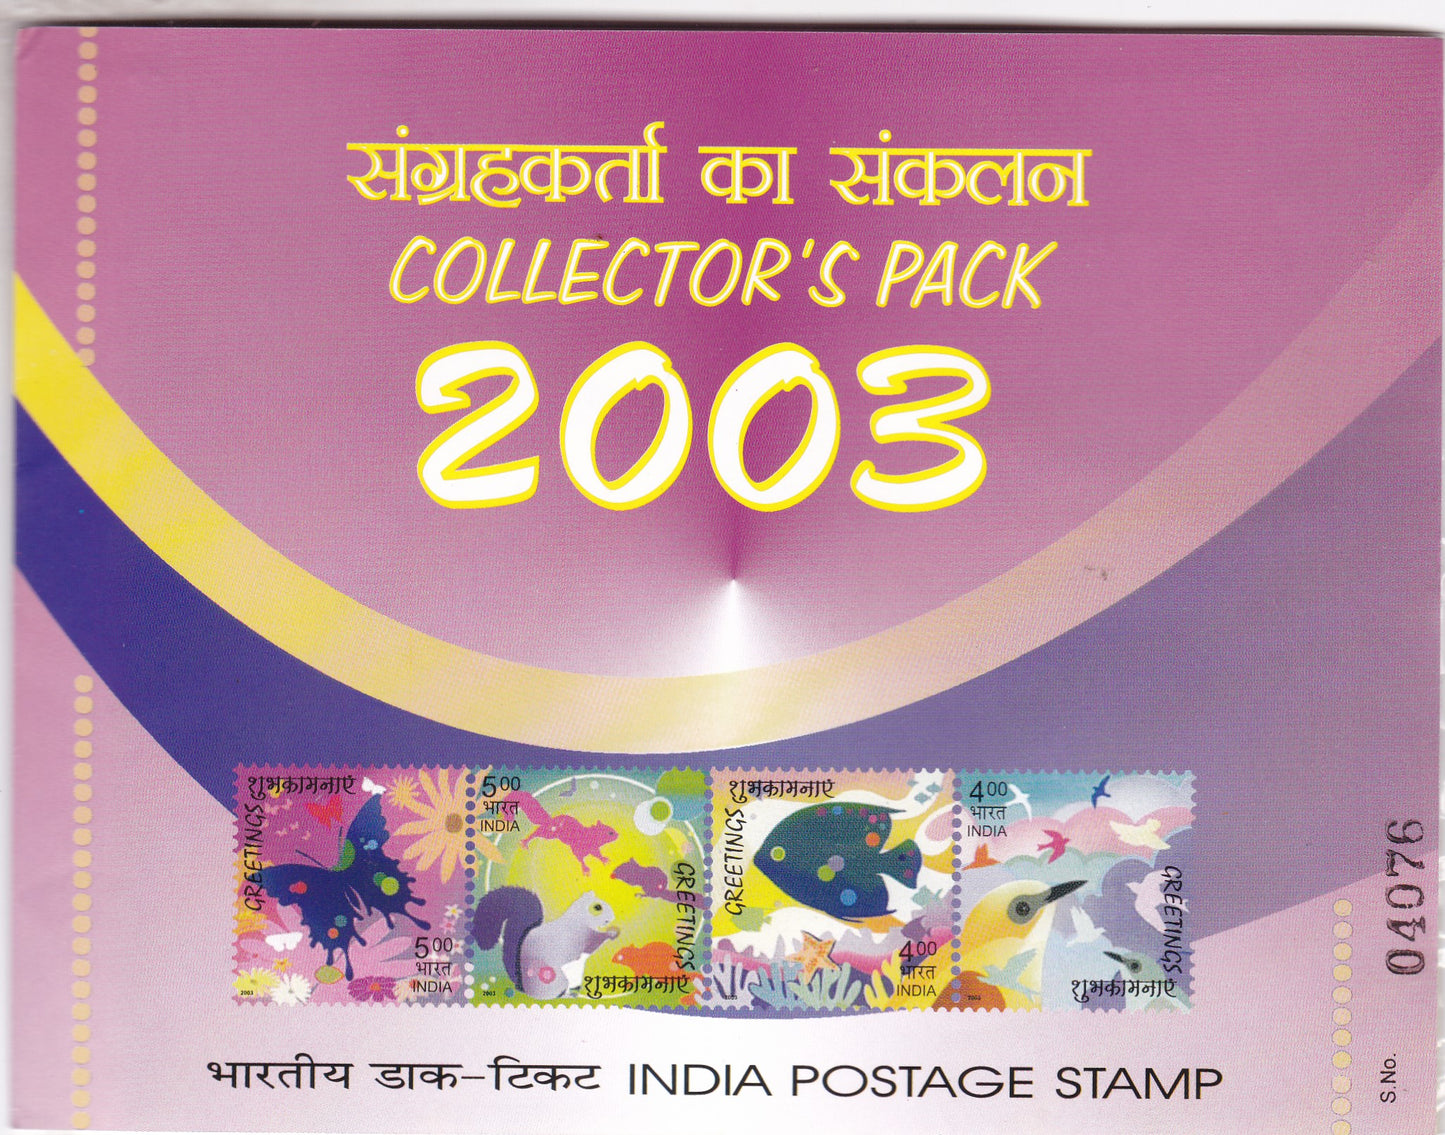 भारत-डाक टिकट वर्ष पैक-2003।